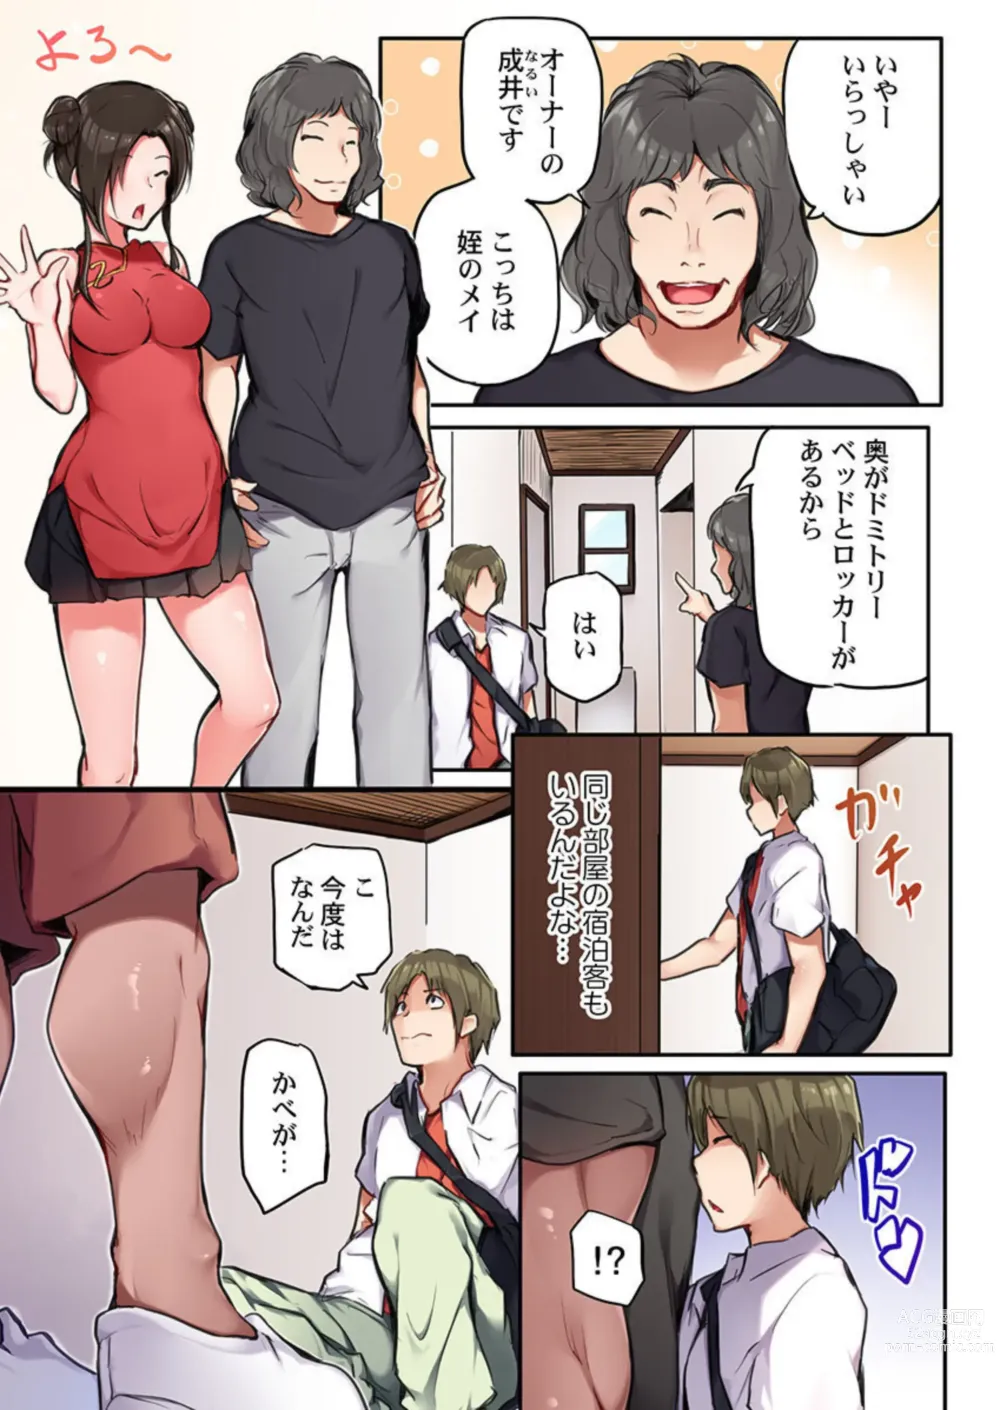 Page 5 of manga Sonna no Zettai ra nai...